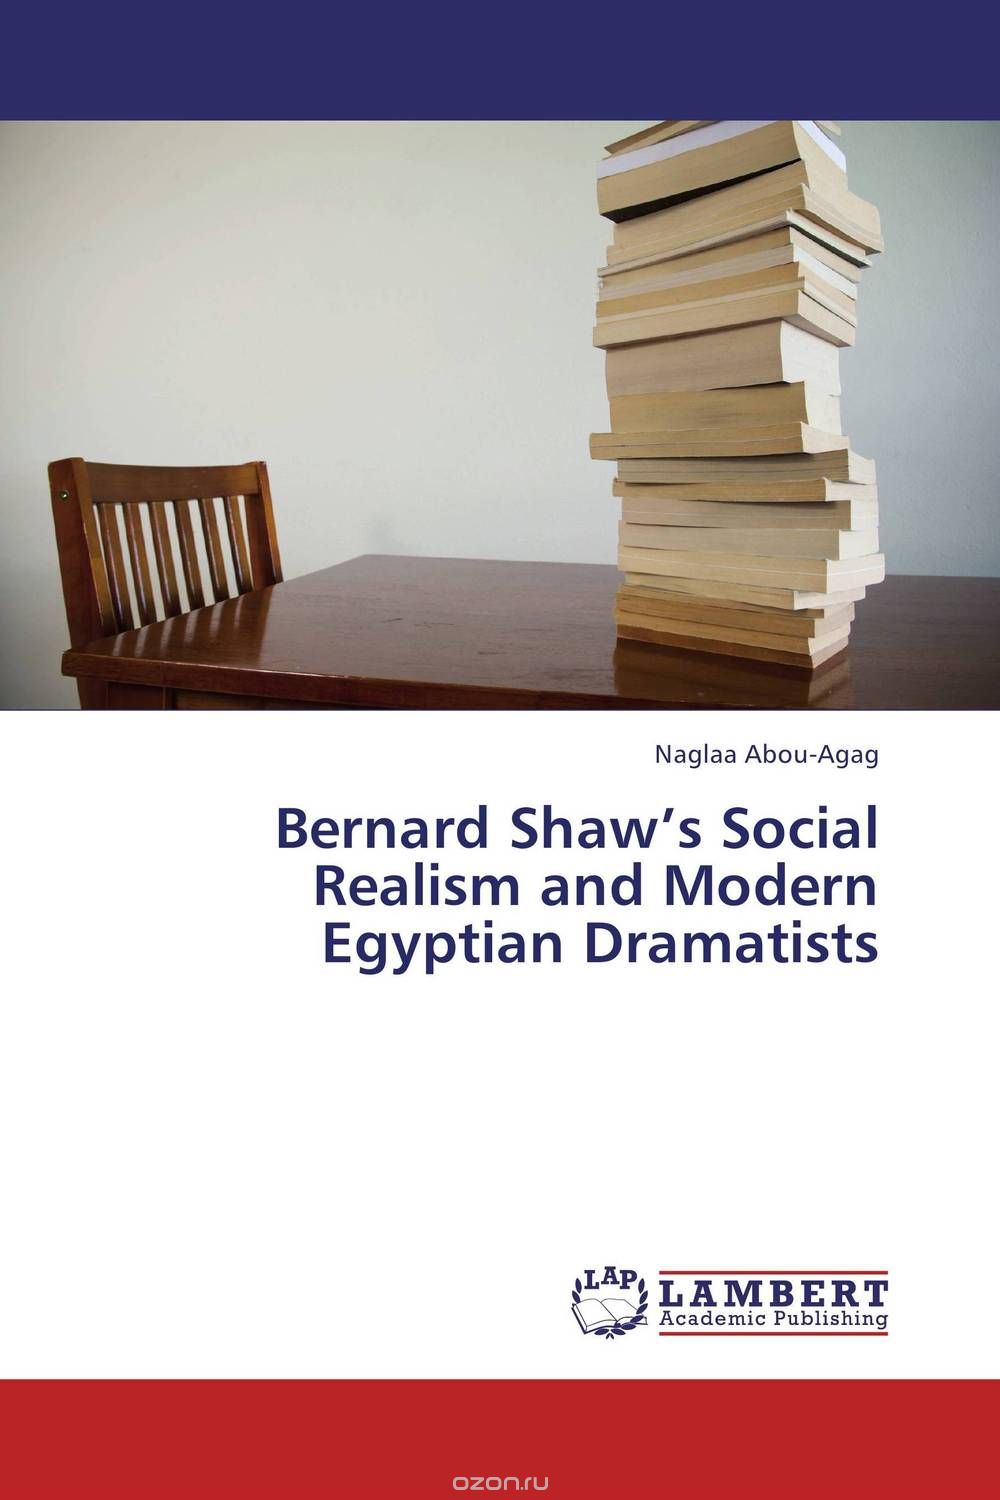 Bernard Shaw’s Social Realism and Modern Egyptian Dramatists